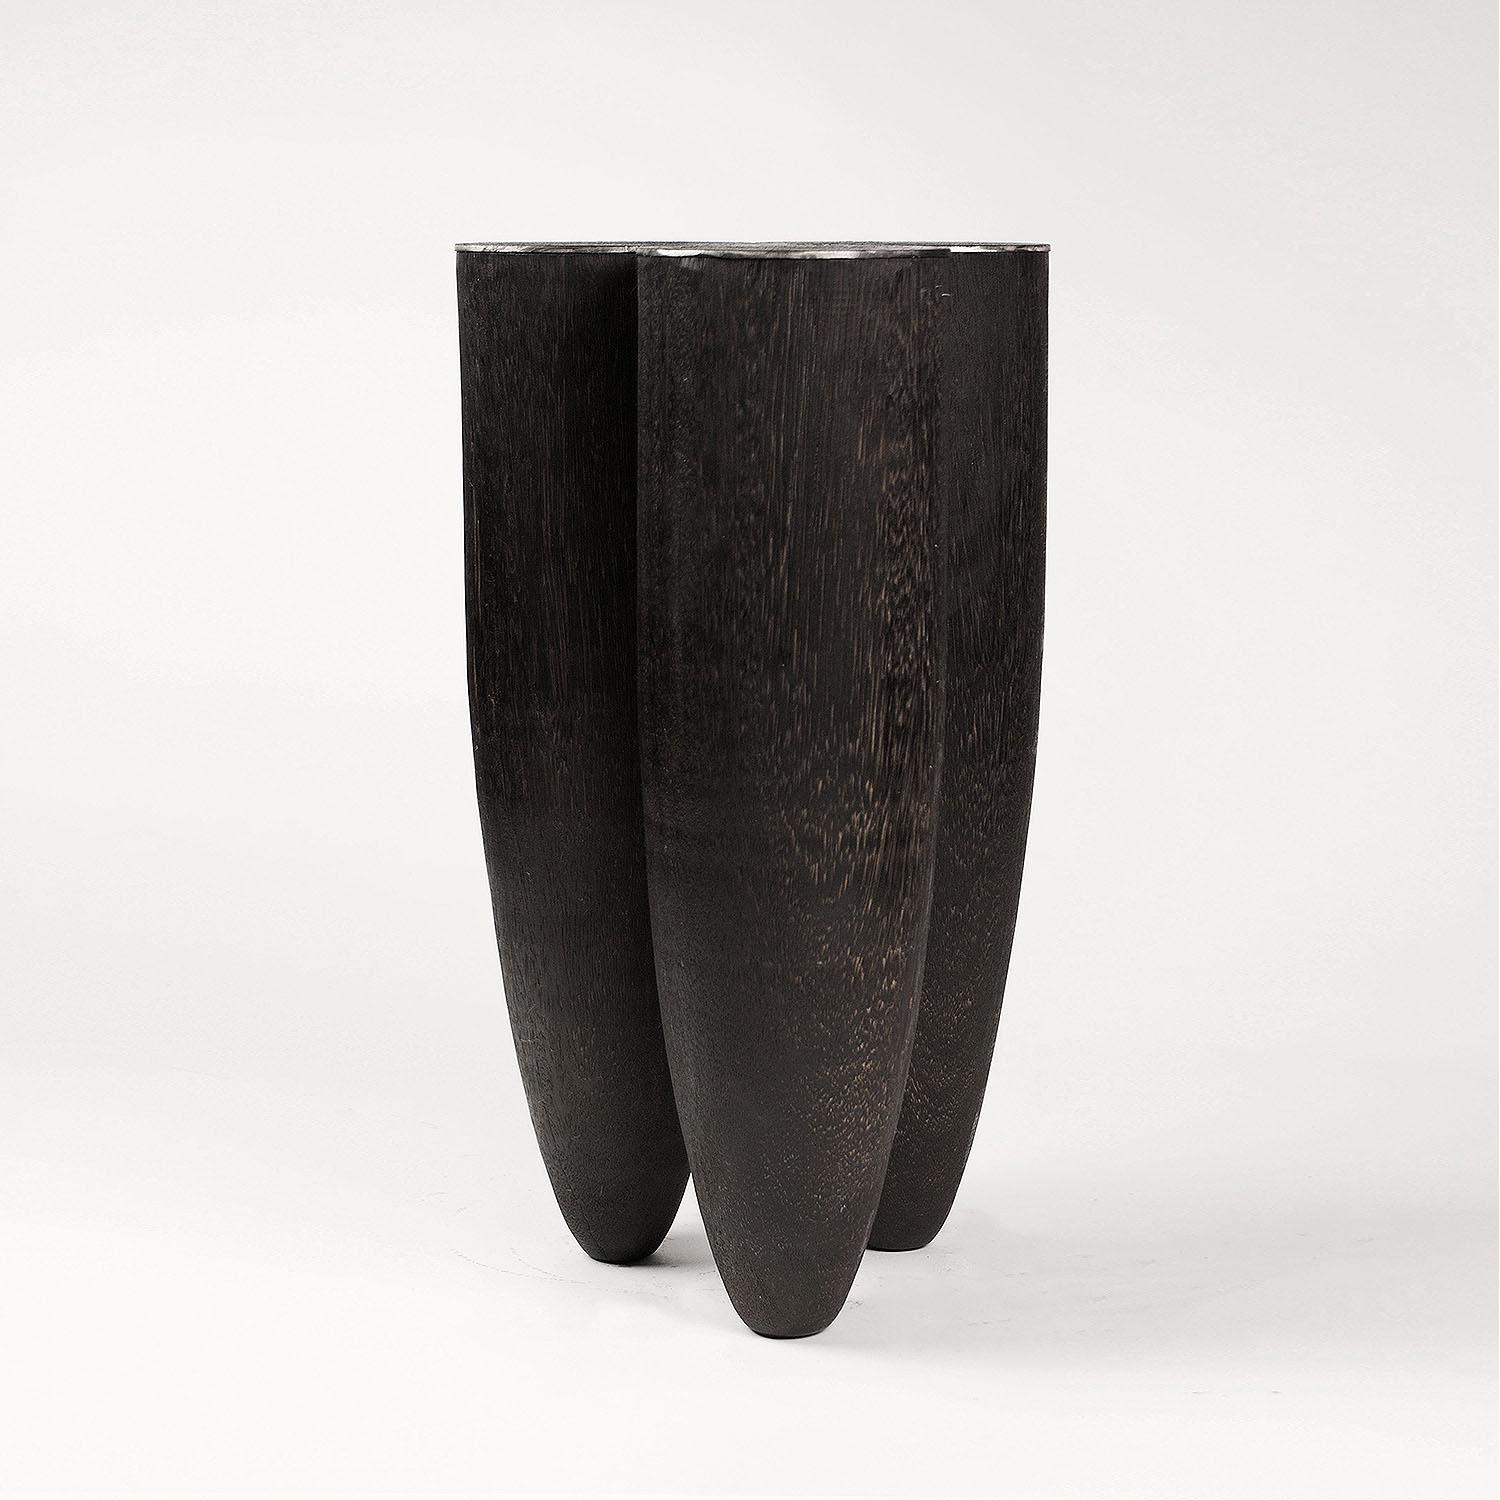 Modern Contemporary Black Stool in Iroko Wood, Senufo by Arno Declercq